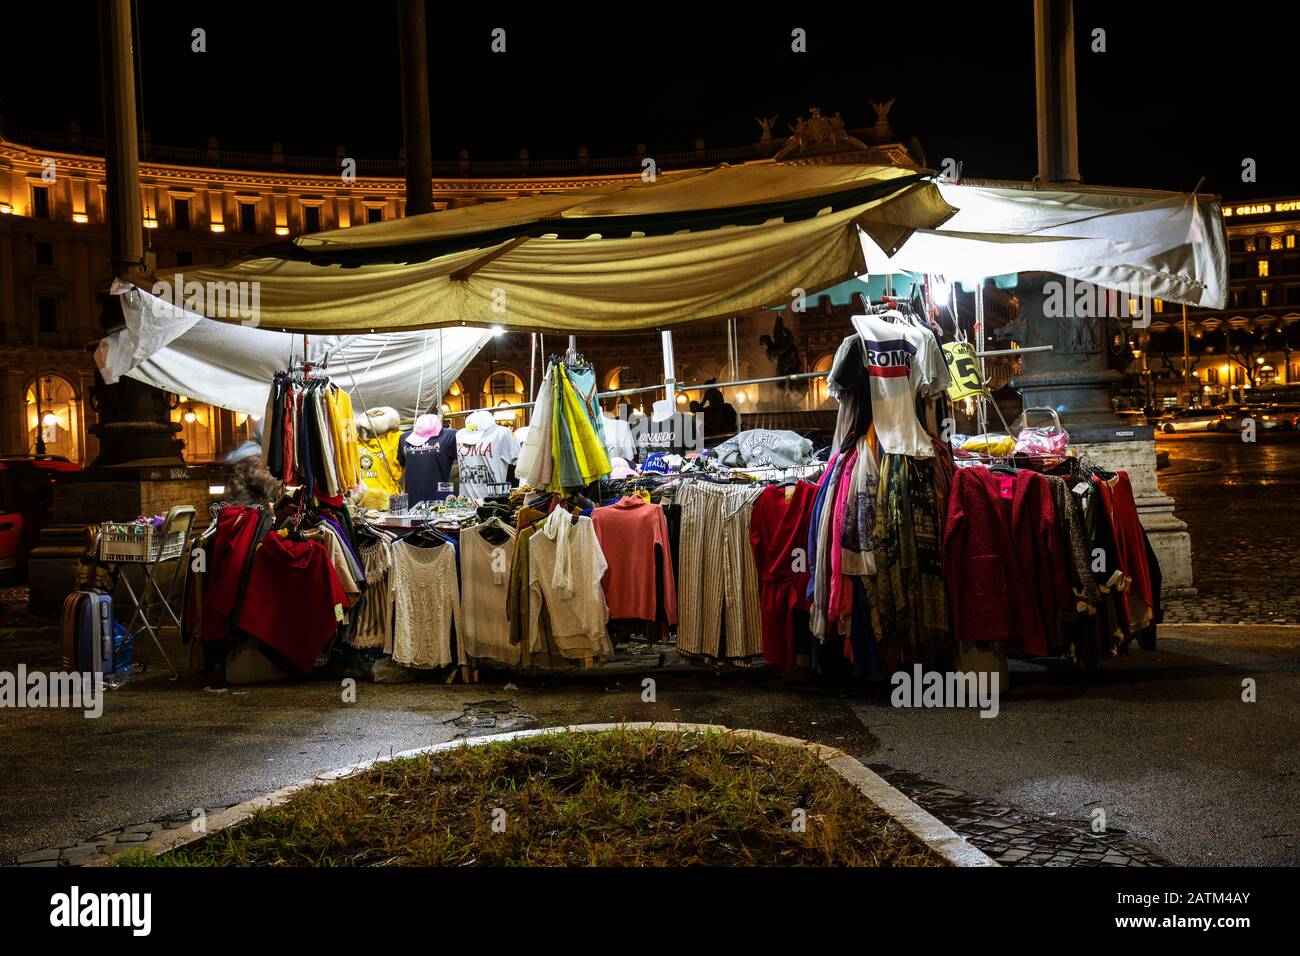 Clothes Market on the street, at night in Piazza della Repubblica Rome Italy. Stock Photo